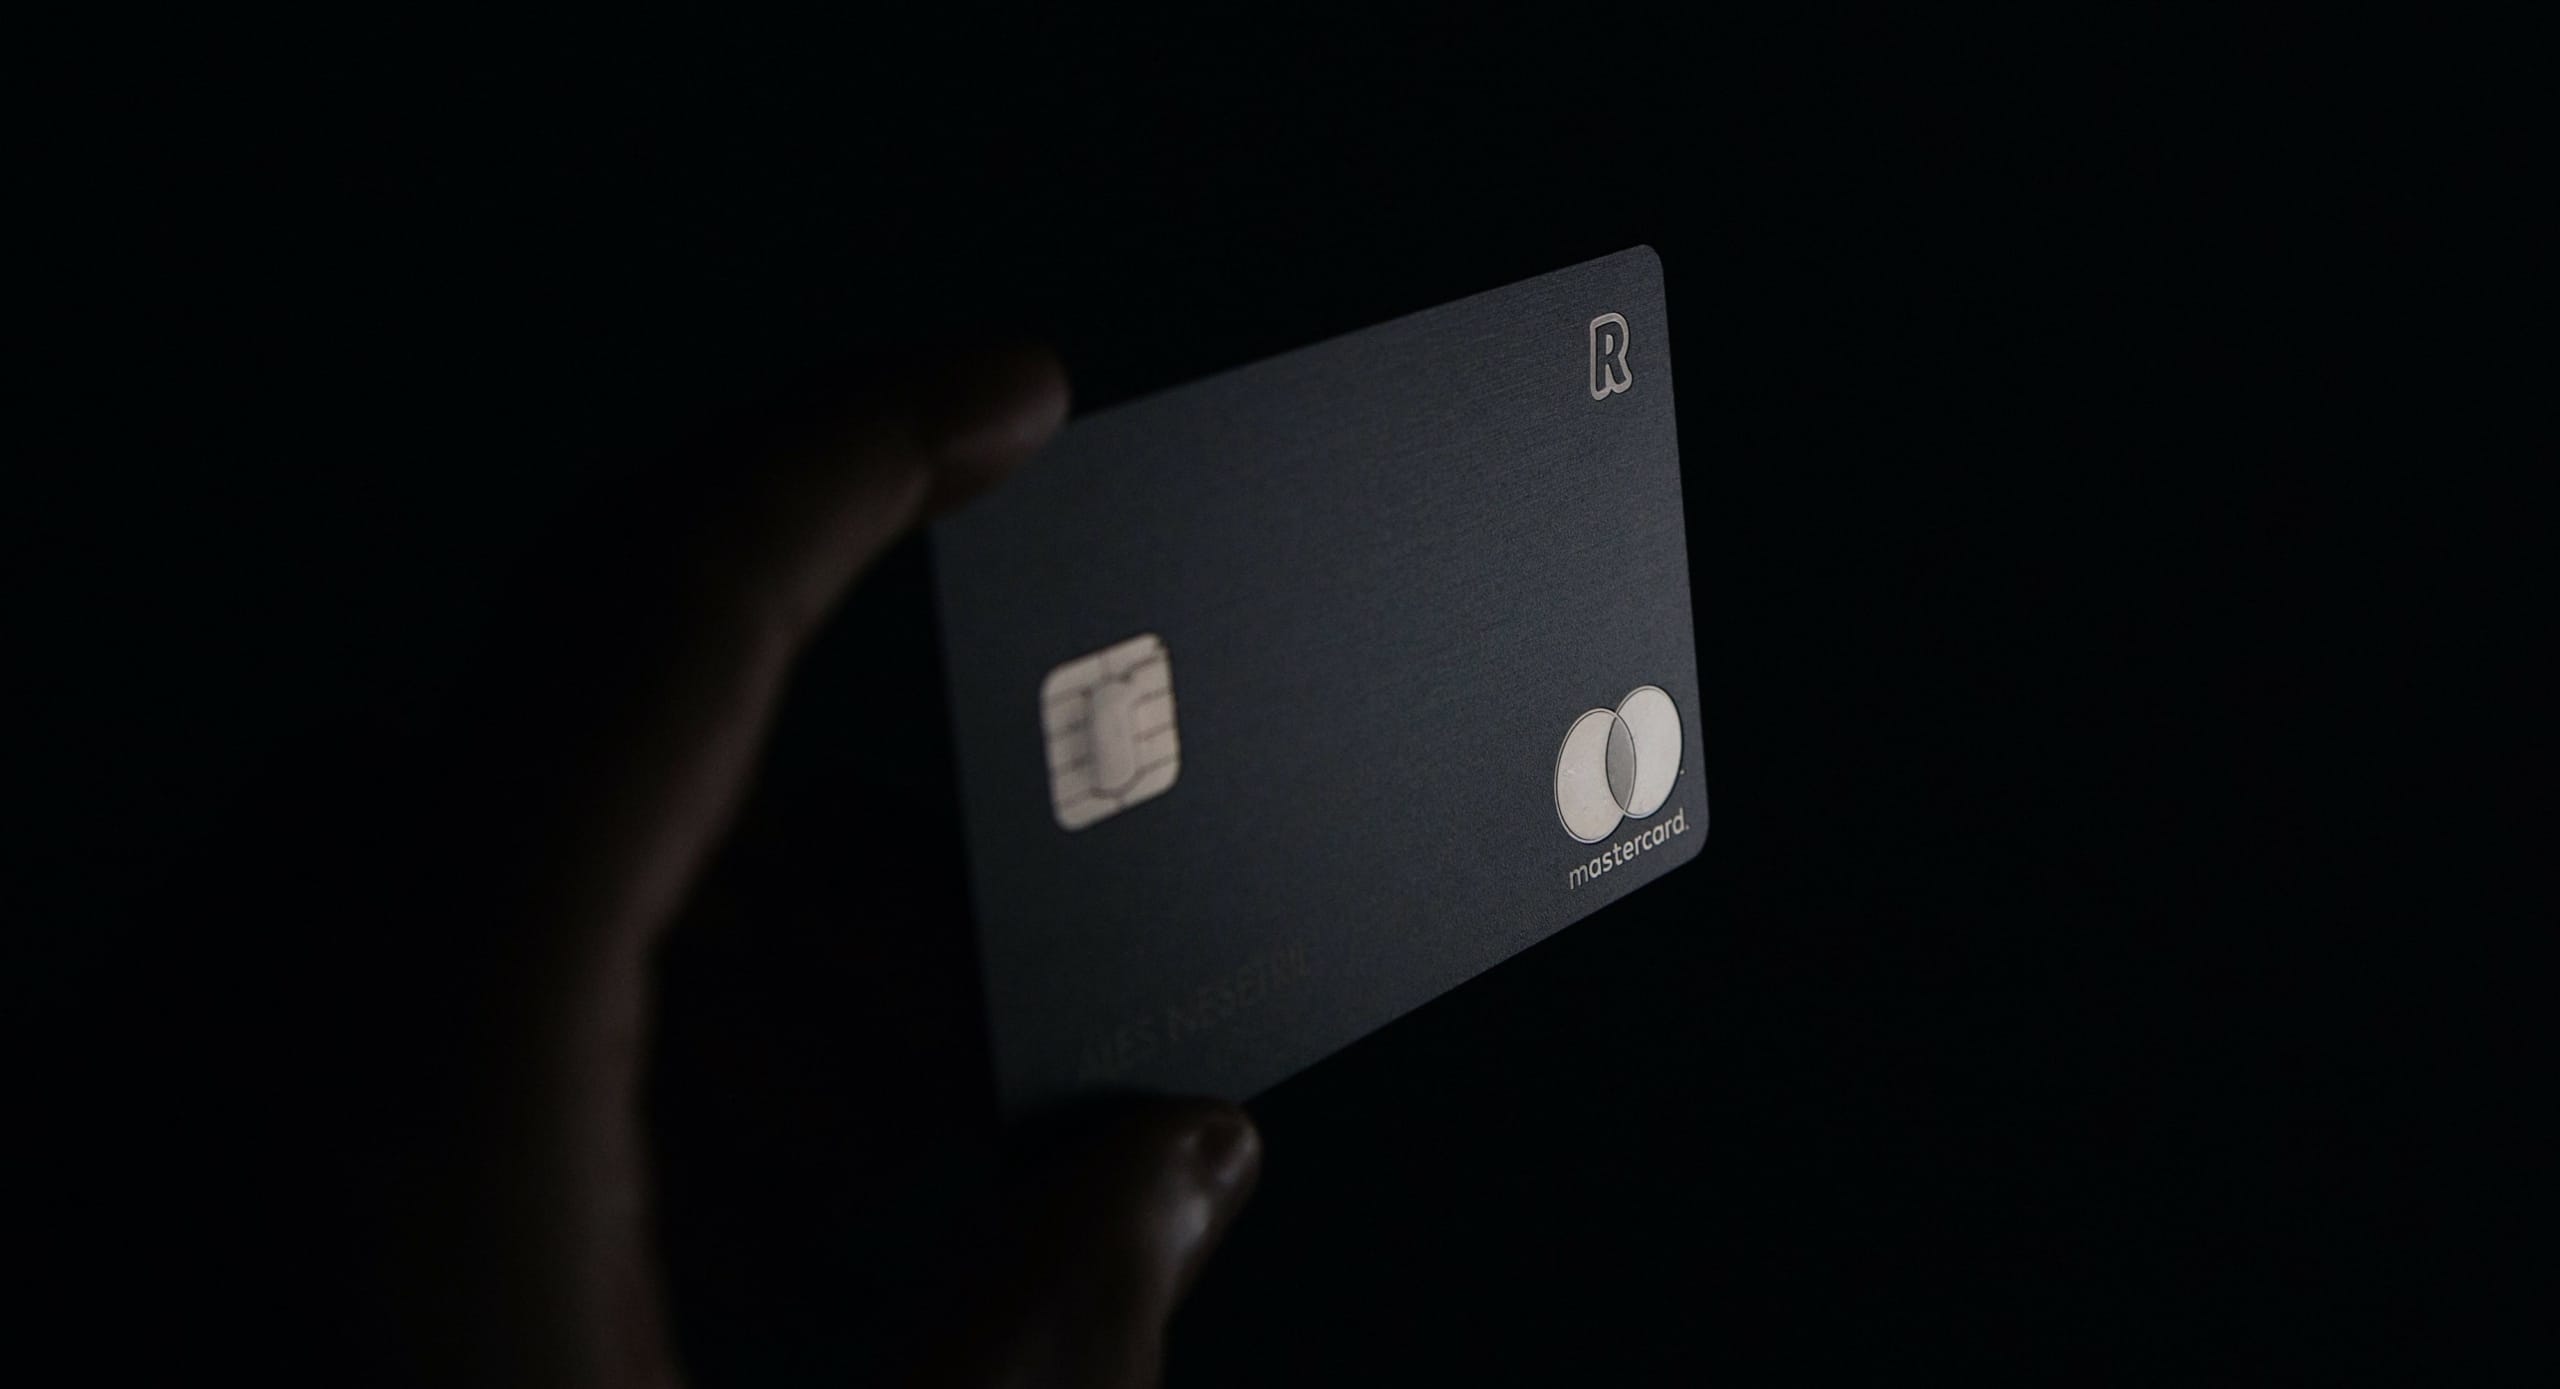 DOXXbet platobna karta debetna karta kreditna karta